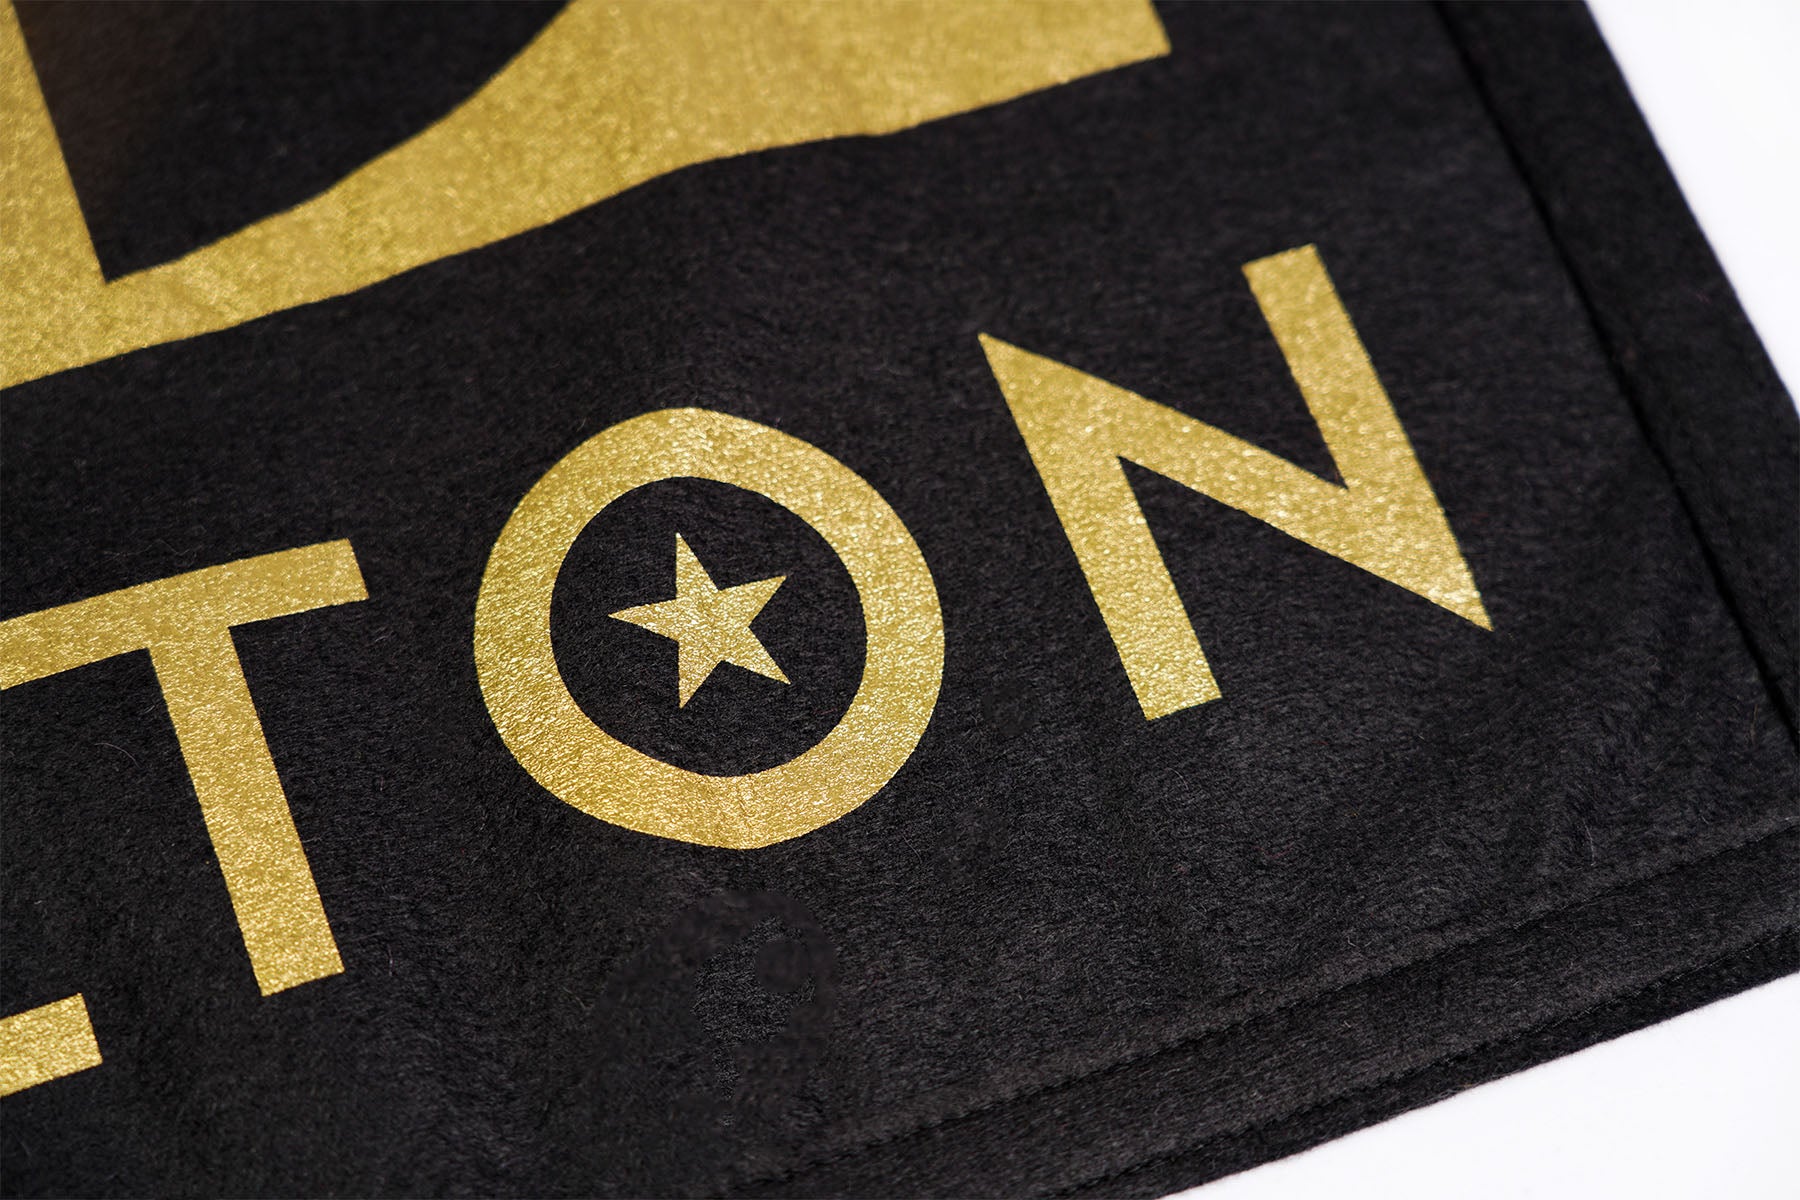 Star Logo Chenille Patch • Elton John x Oxford Pennant